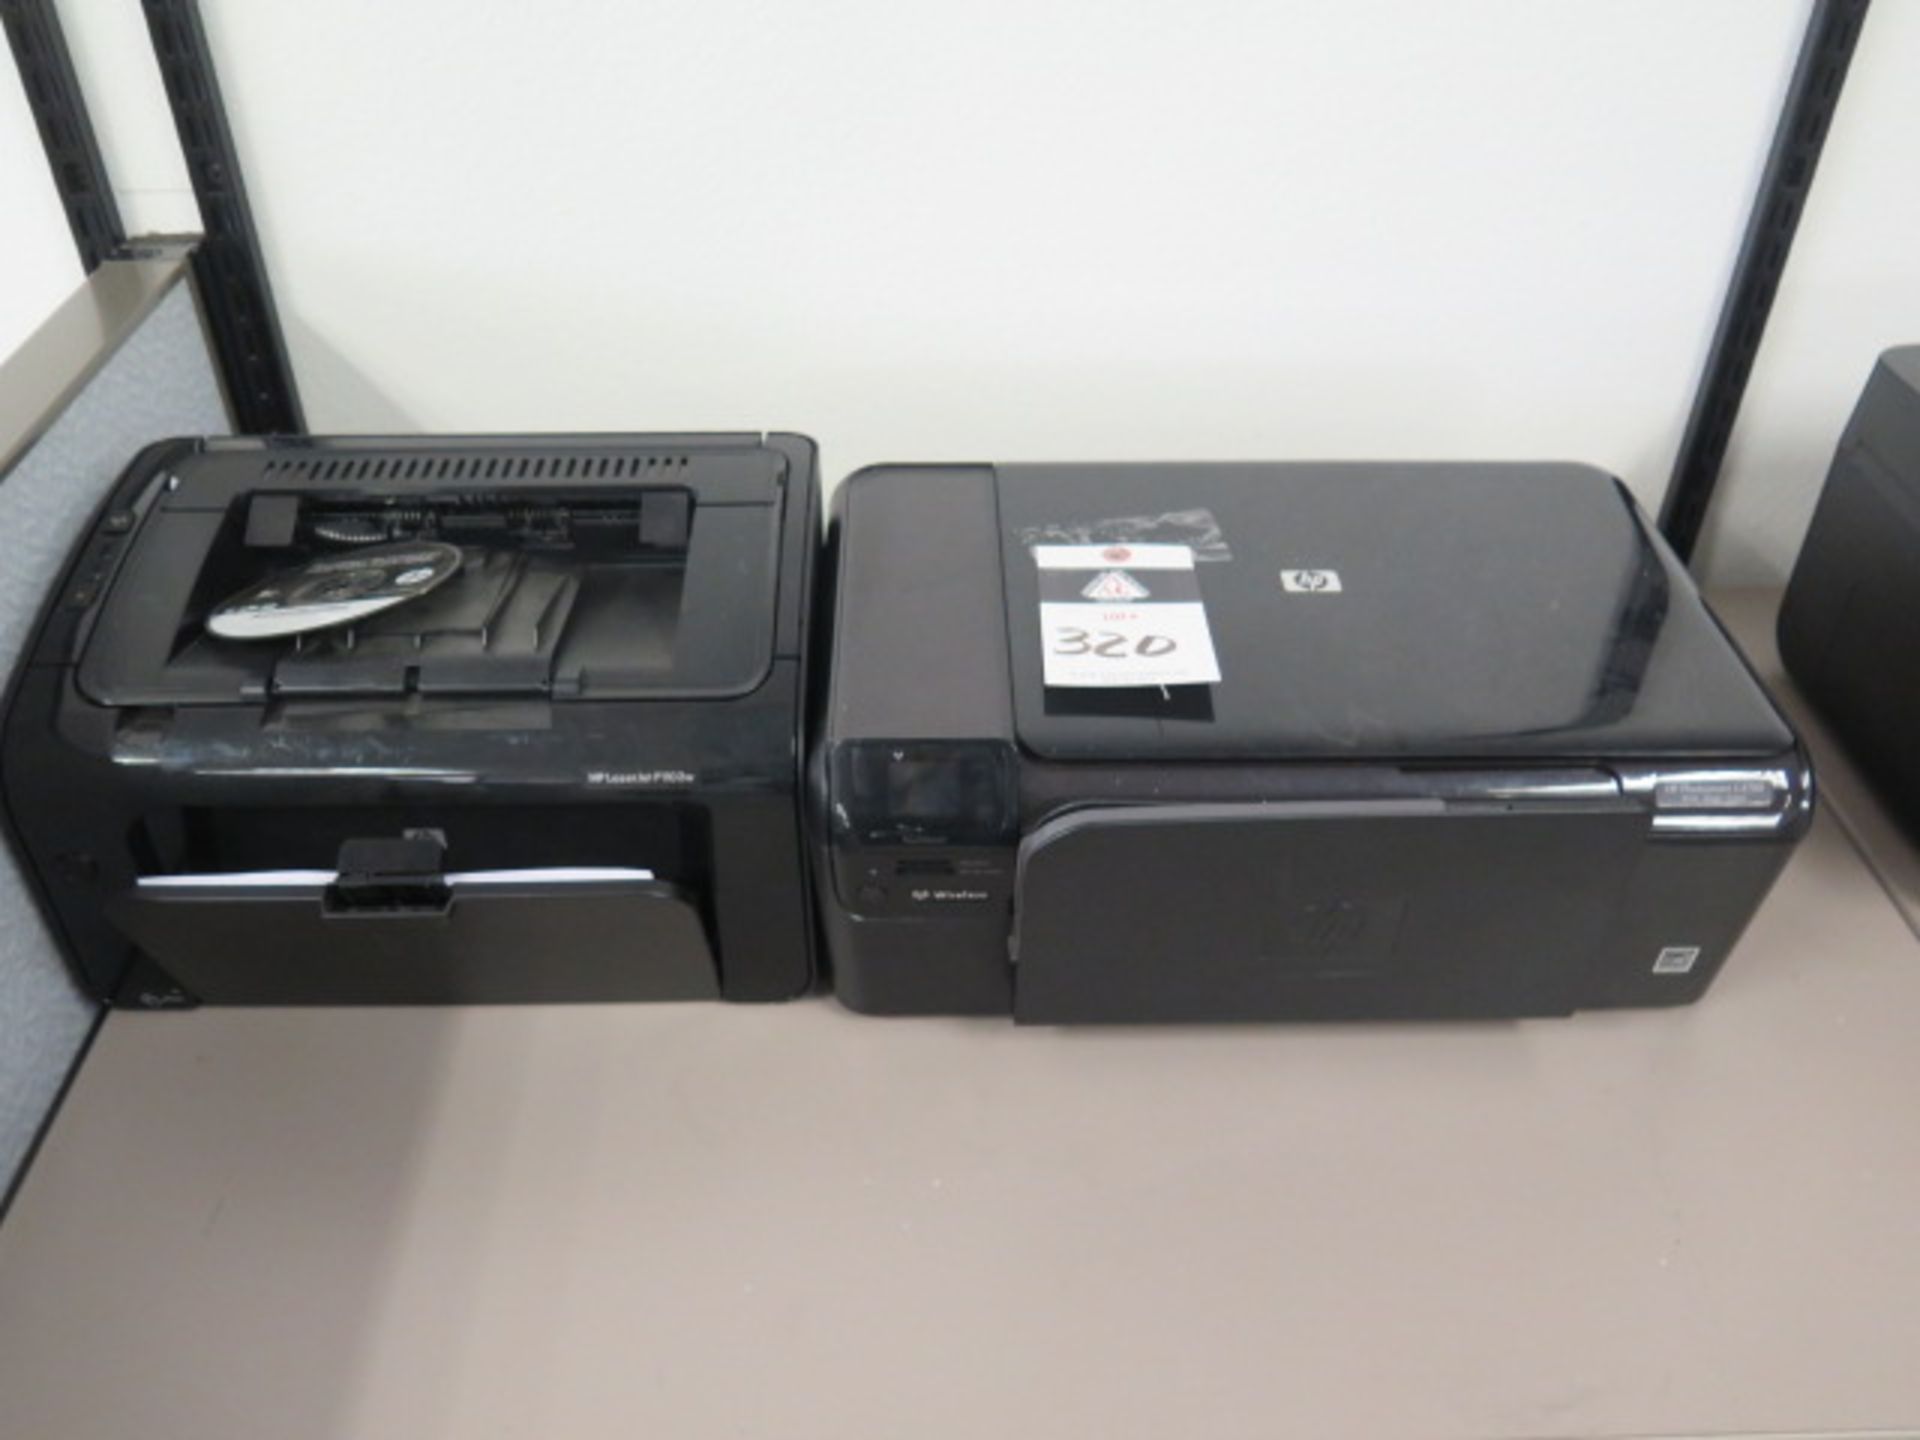 HP Photosmart C4780 and Laserjet P1102w Printers